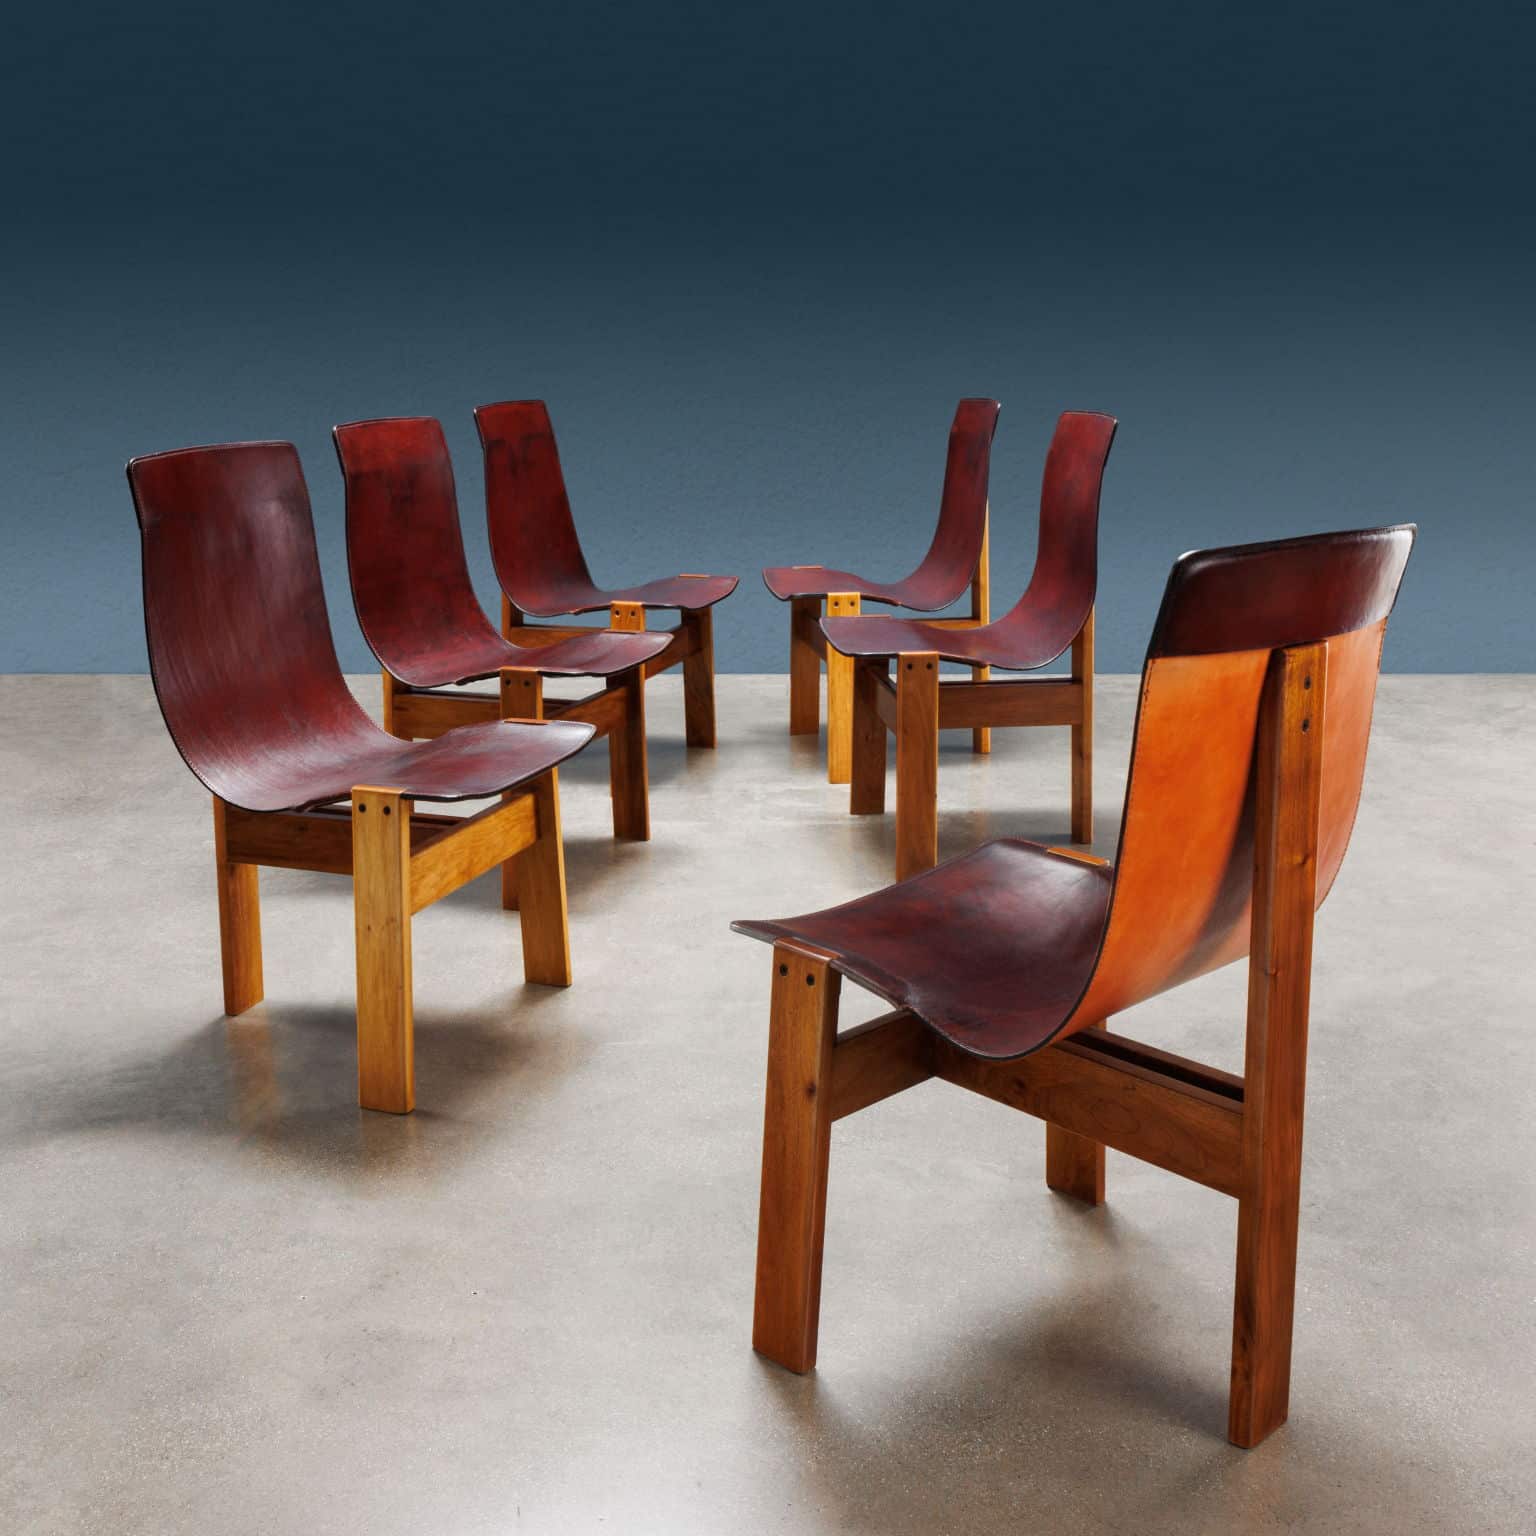 Angelo Mangiarotti ‘Tre 3’ chairs for Skipper